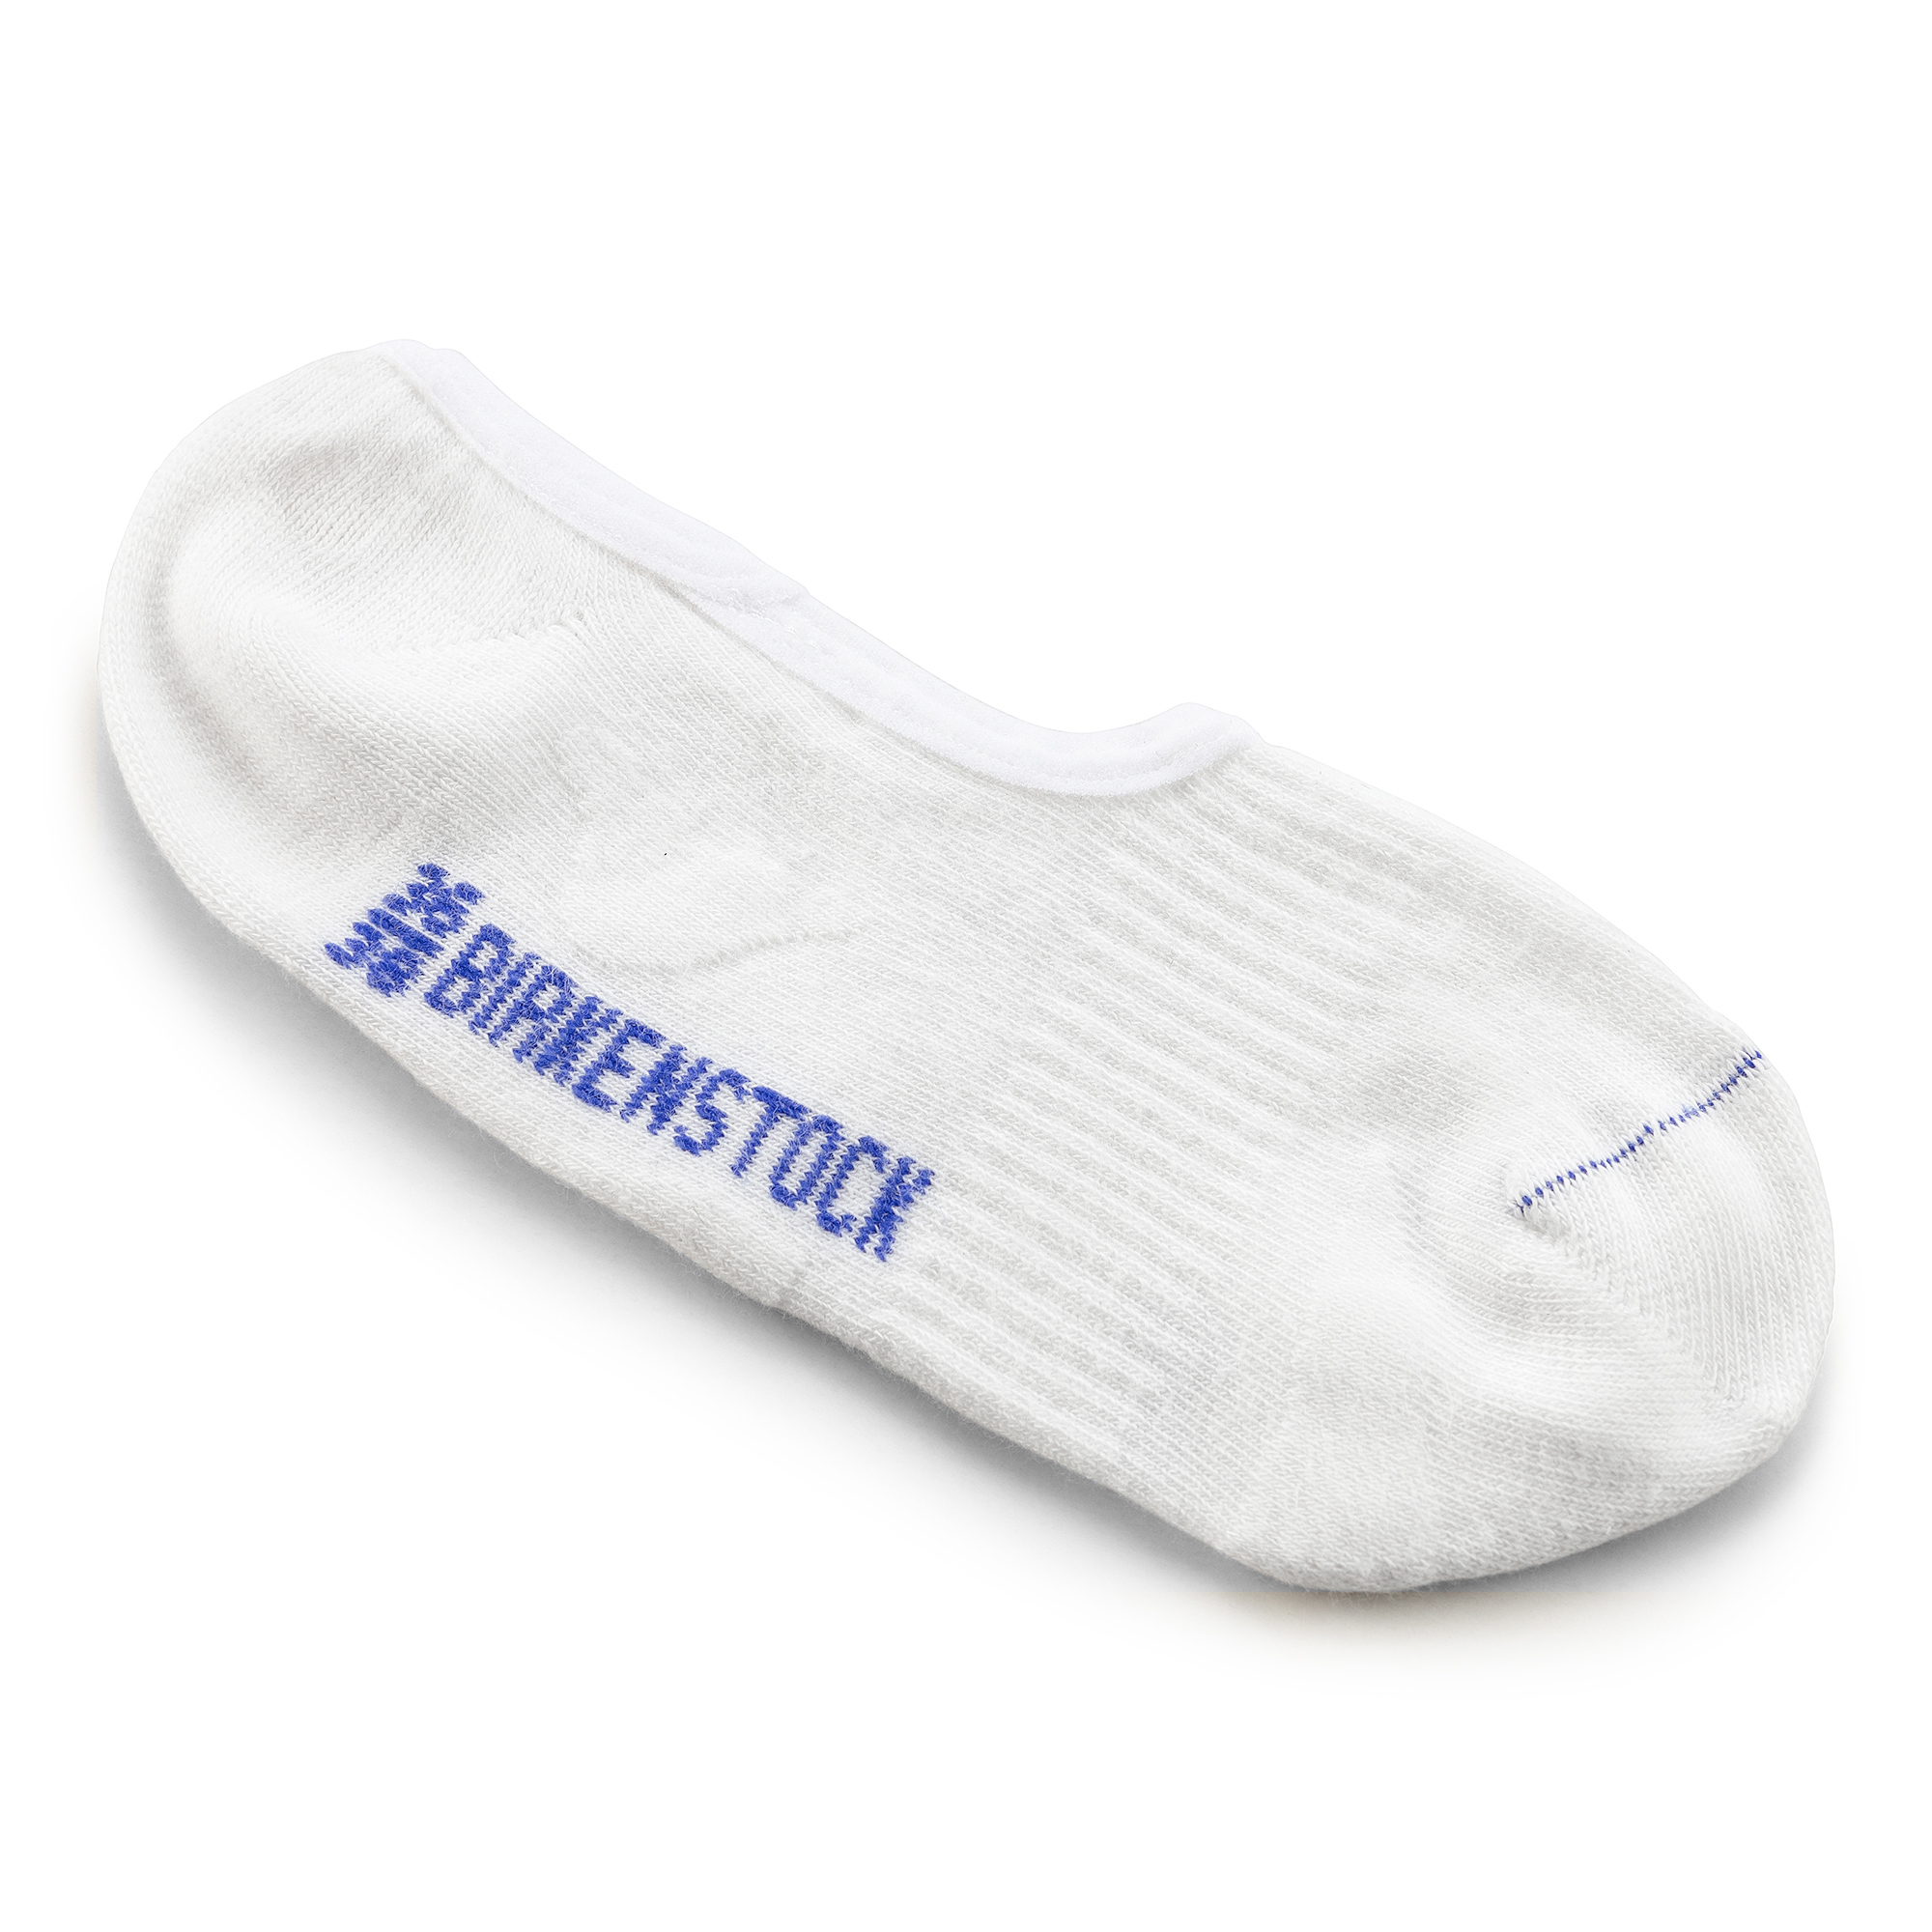 Cotton Sole Sock White | shop online at 